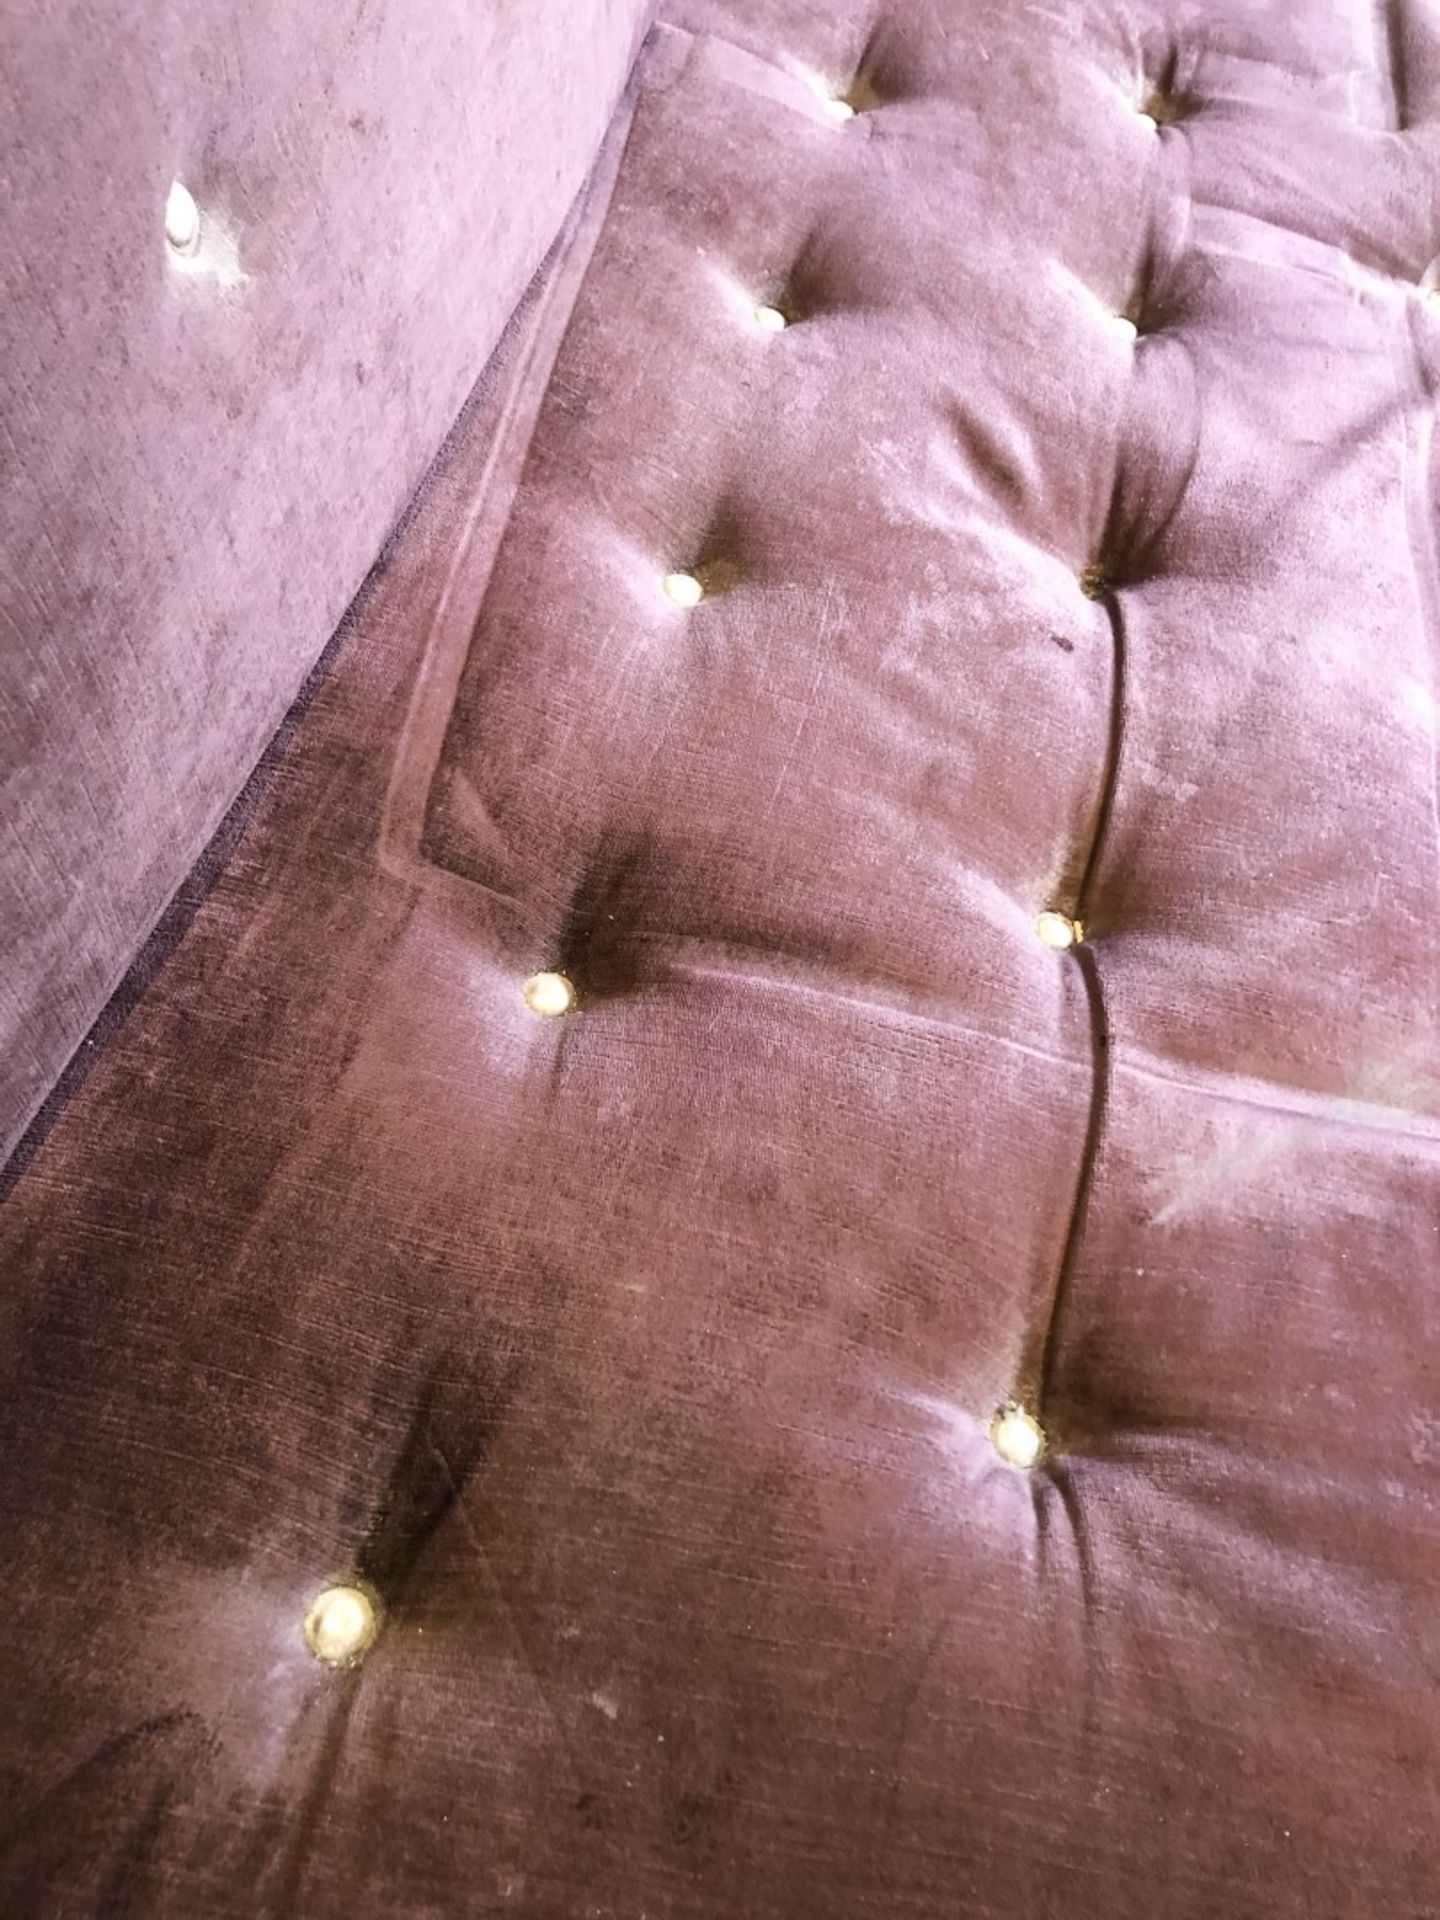 1 x Large Purple Velour Sofa - NC1070 - CL380 - Location: Altrincham WA14 - NO VAT - Image 3 of 4